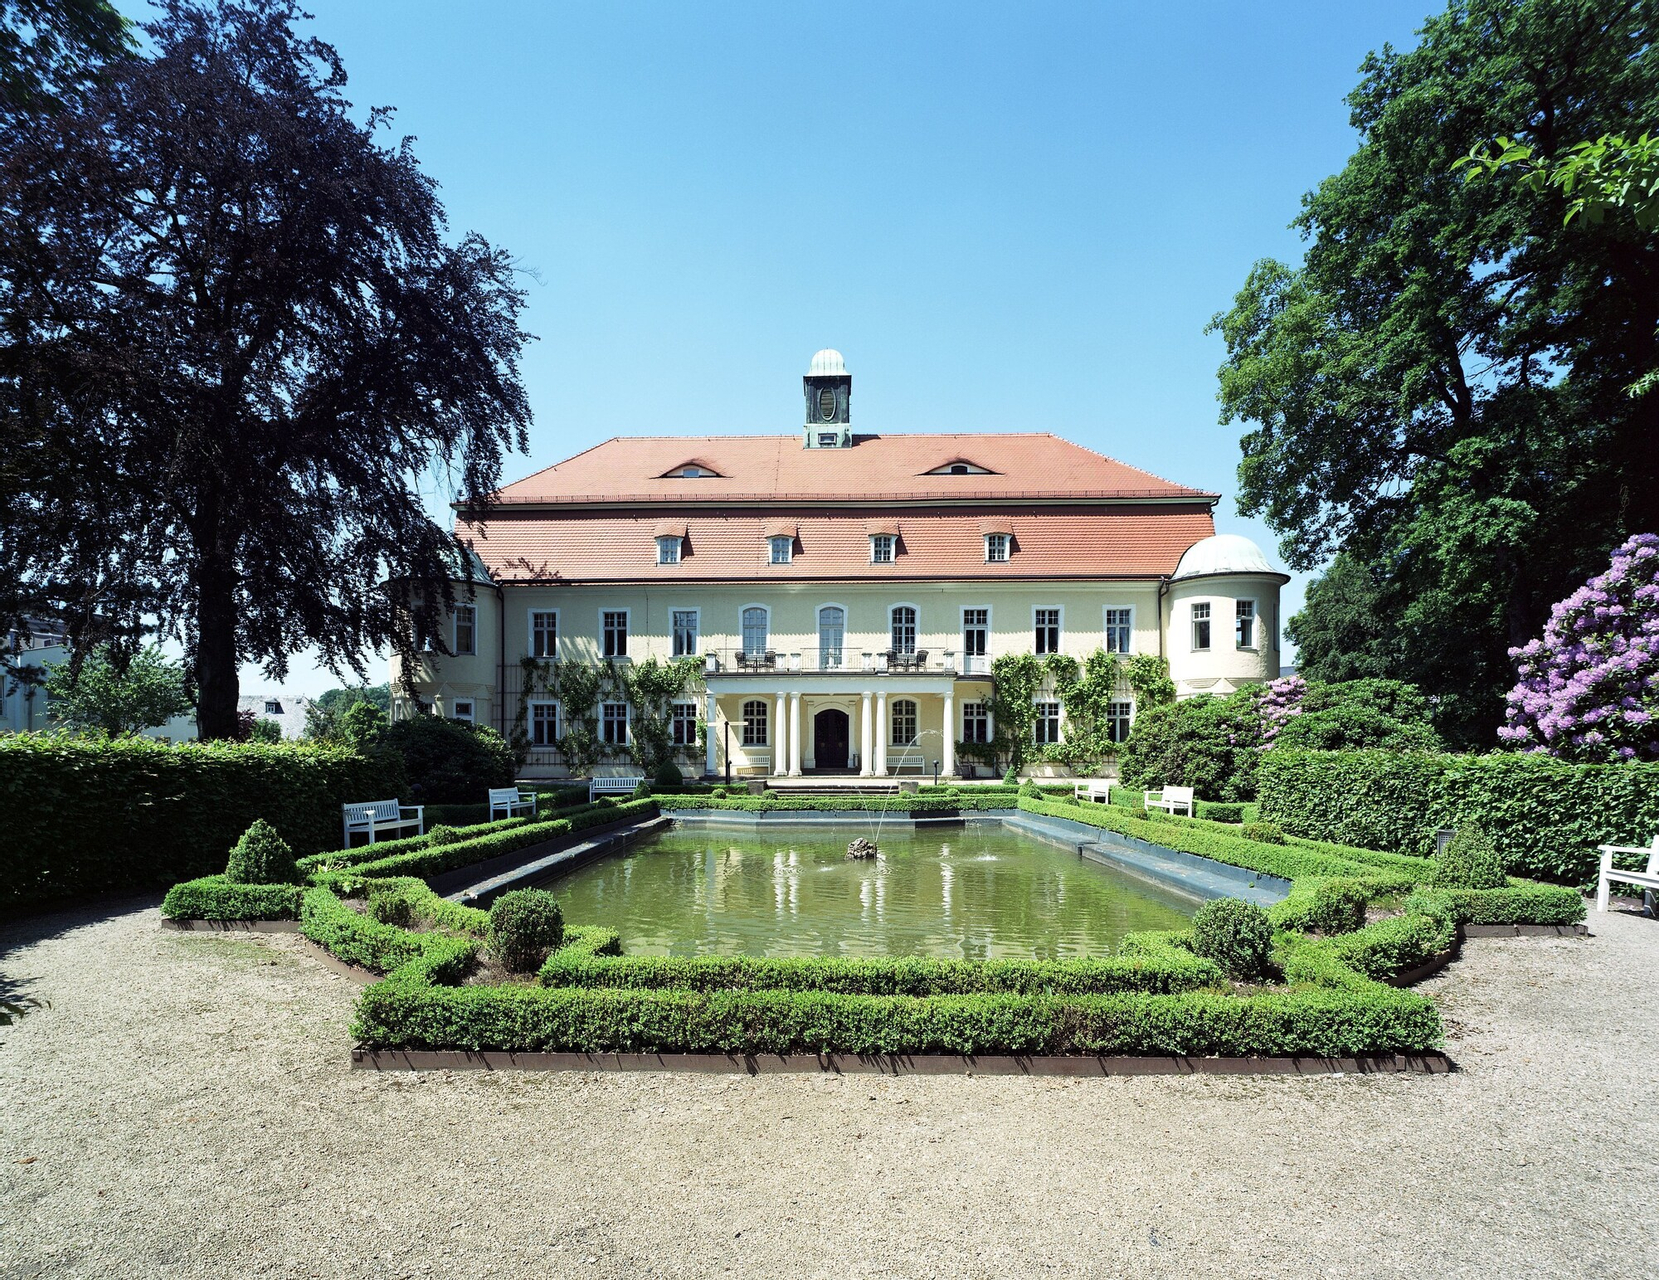 Exterior & Views 1, Schloss Schweinsburg Hotel, Zwickau